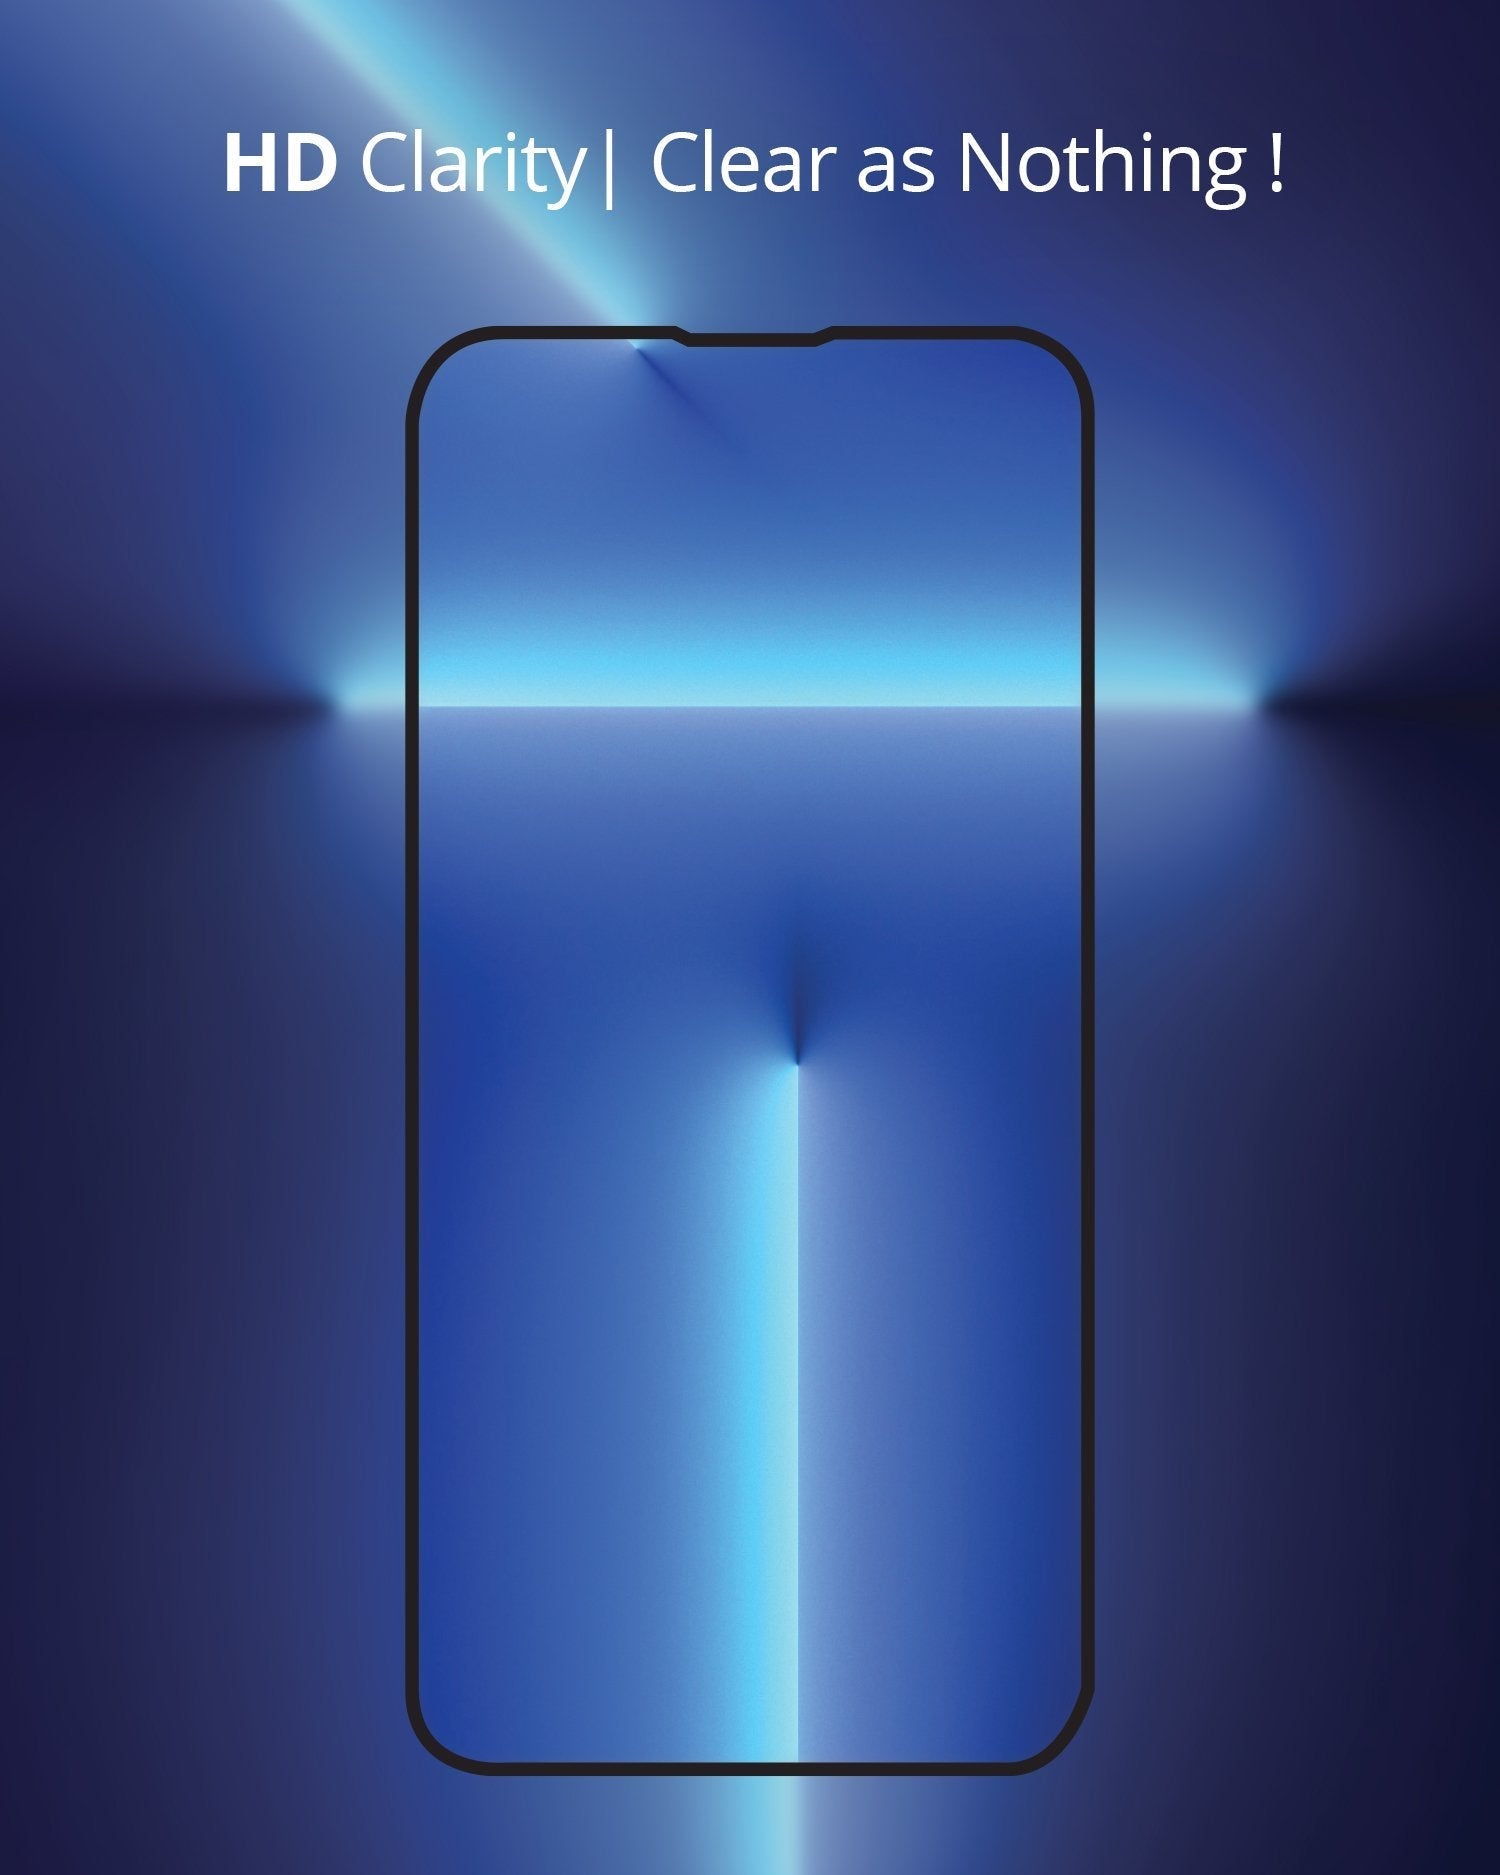 RAEGR GLaS HD EZ FIX IPhone 13 Pro Max / iPhone 14 Plus Full Cover Tempered Glass